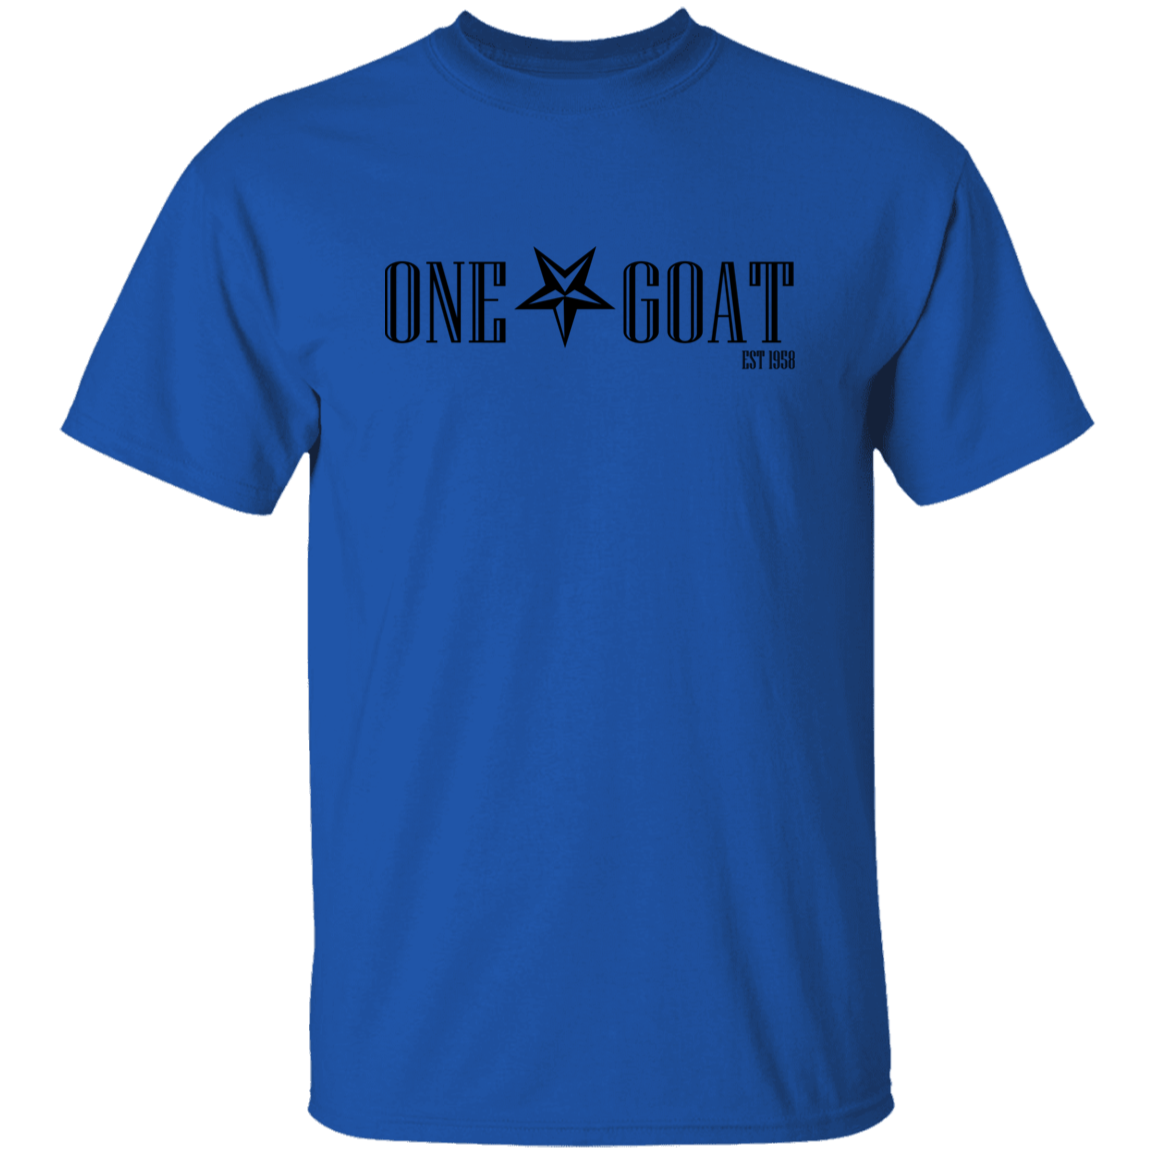 One Star Goat 5.3 oz. T-Shirt